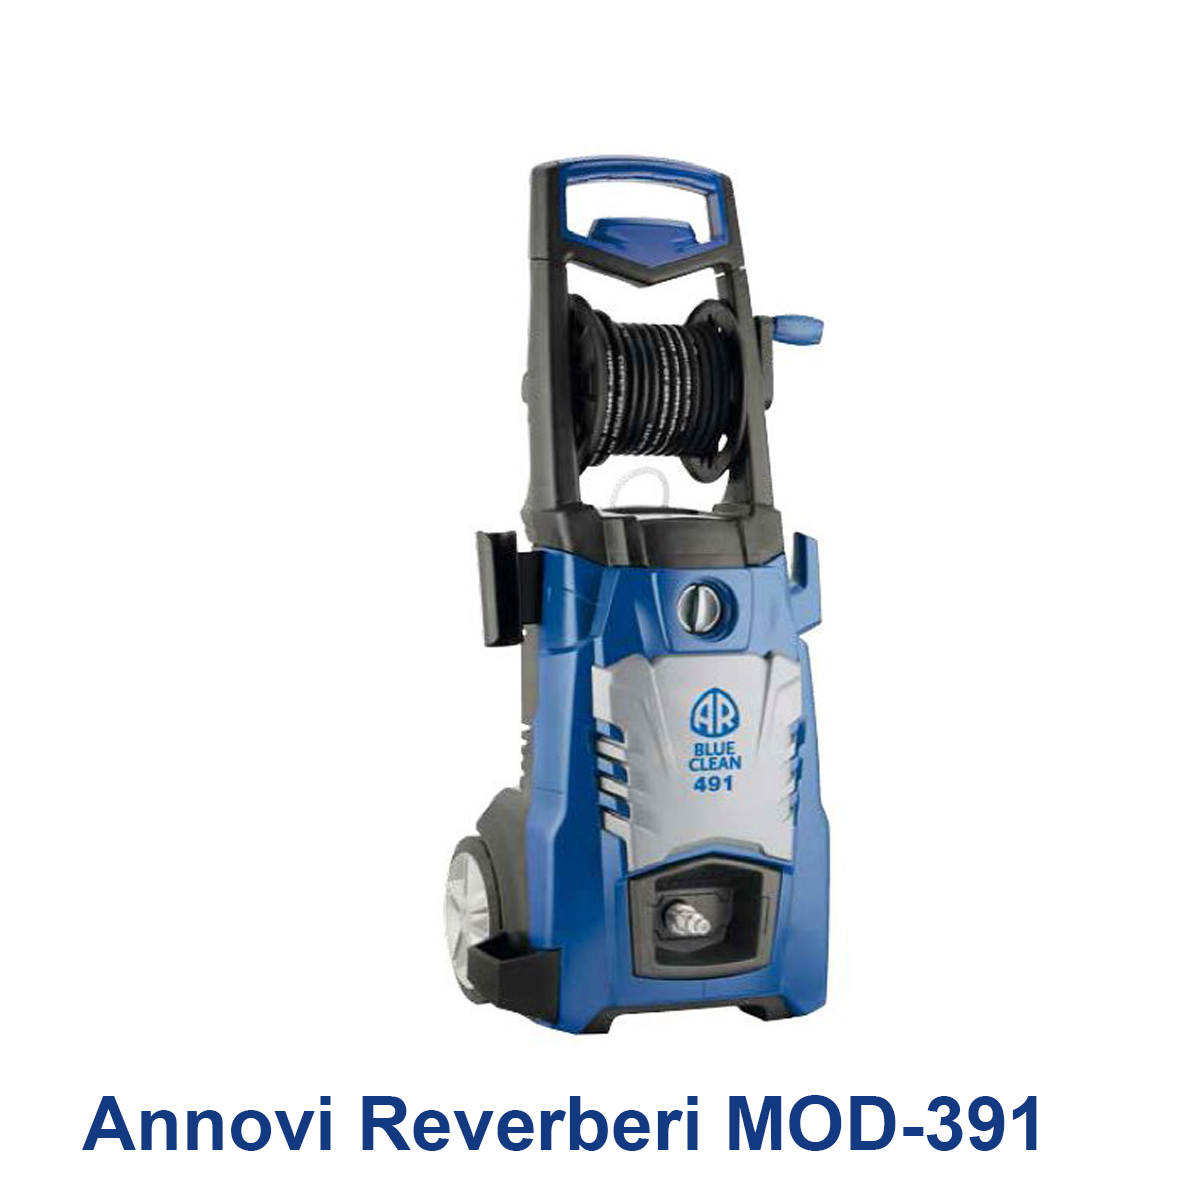 Annovi-Reverberi-MOD-391